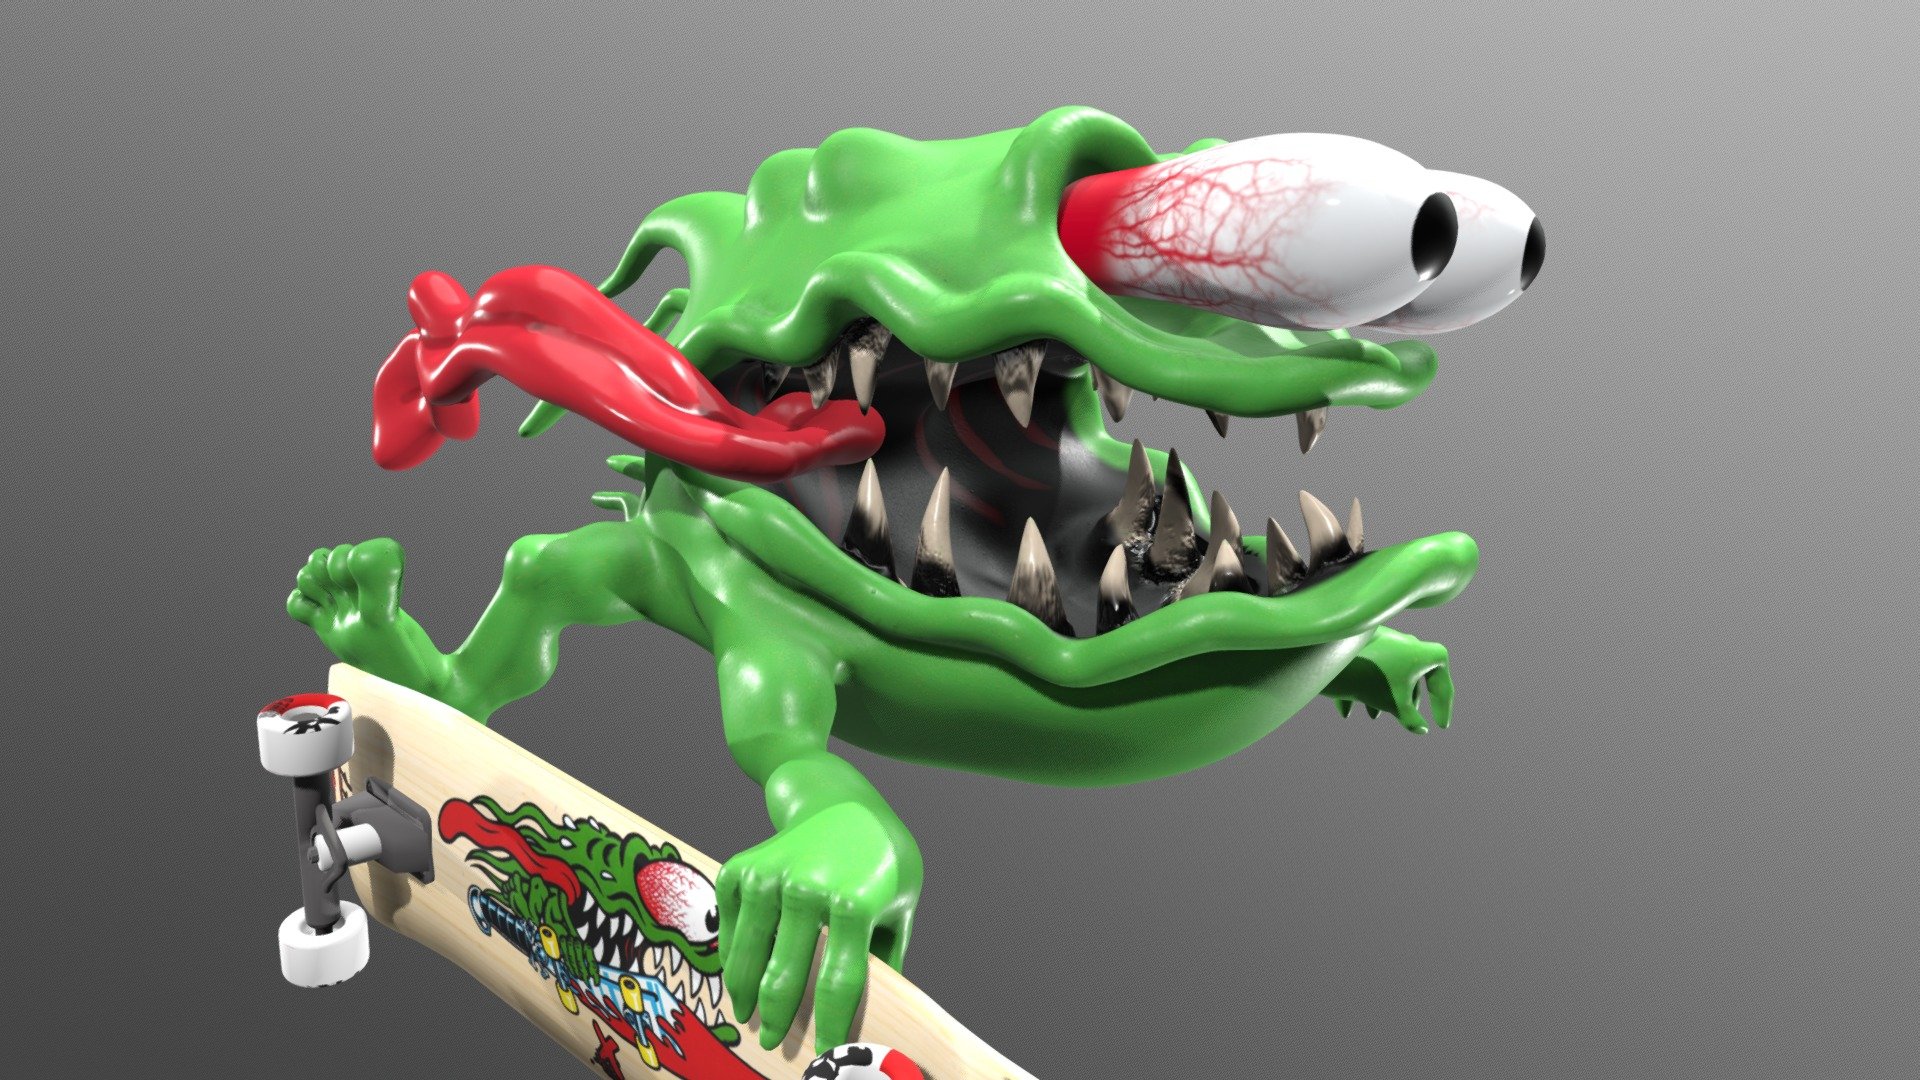 Santa Cruz Slasher Monster!

artstation.com/nateordie to see animation / renders. 

Additional Files include: 
HP OBJ for 3D Printing
Blender file with Rig For Animation 3d model